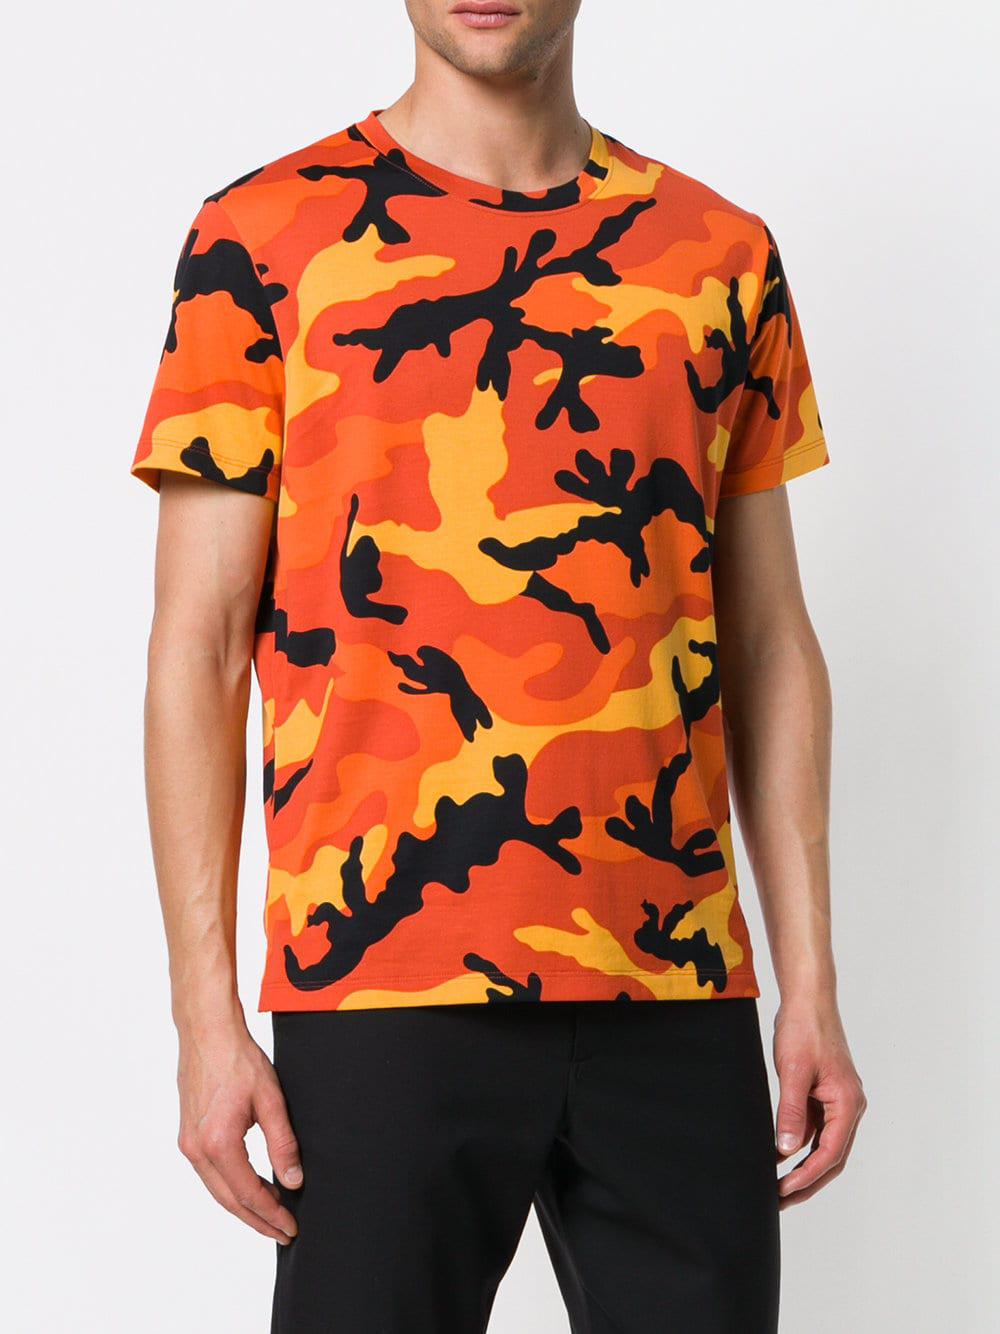 Valentino Cotton Camouflage T-shirt in Orange Camo (Orange) for Men - Lyst